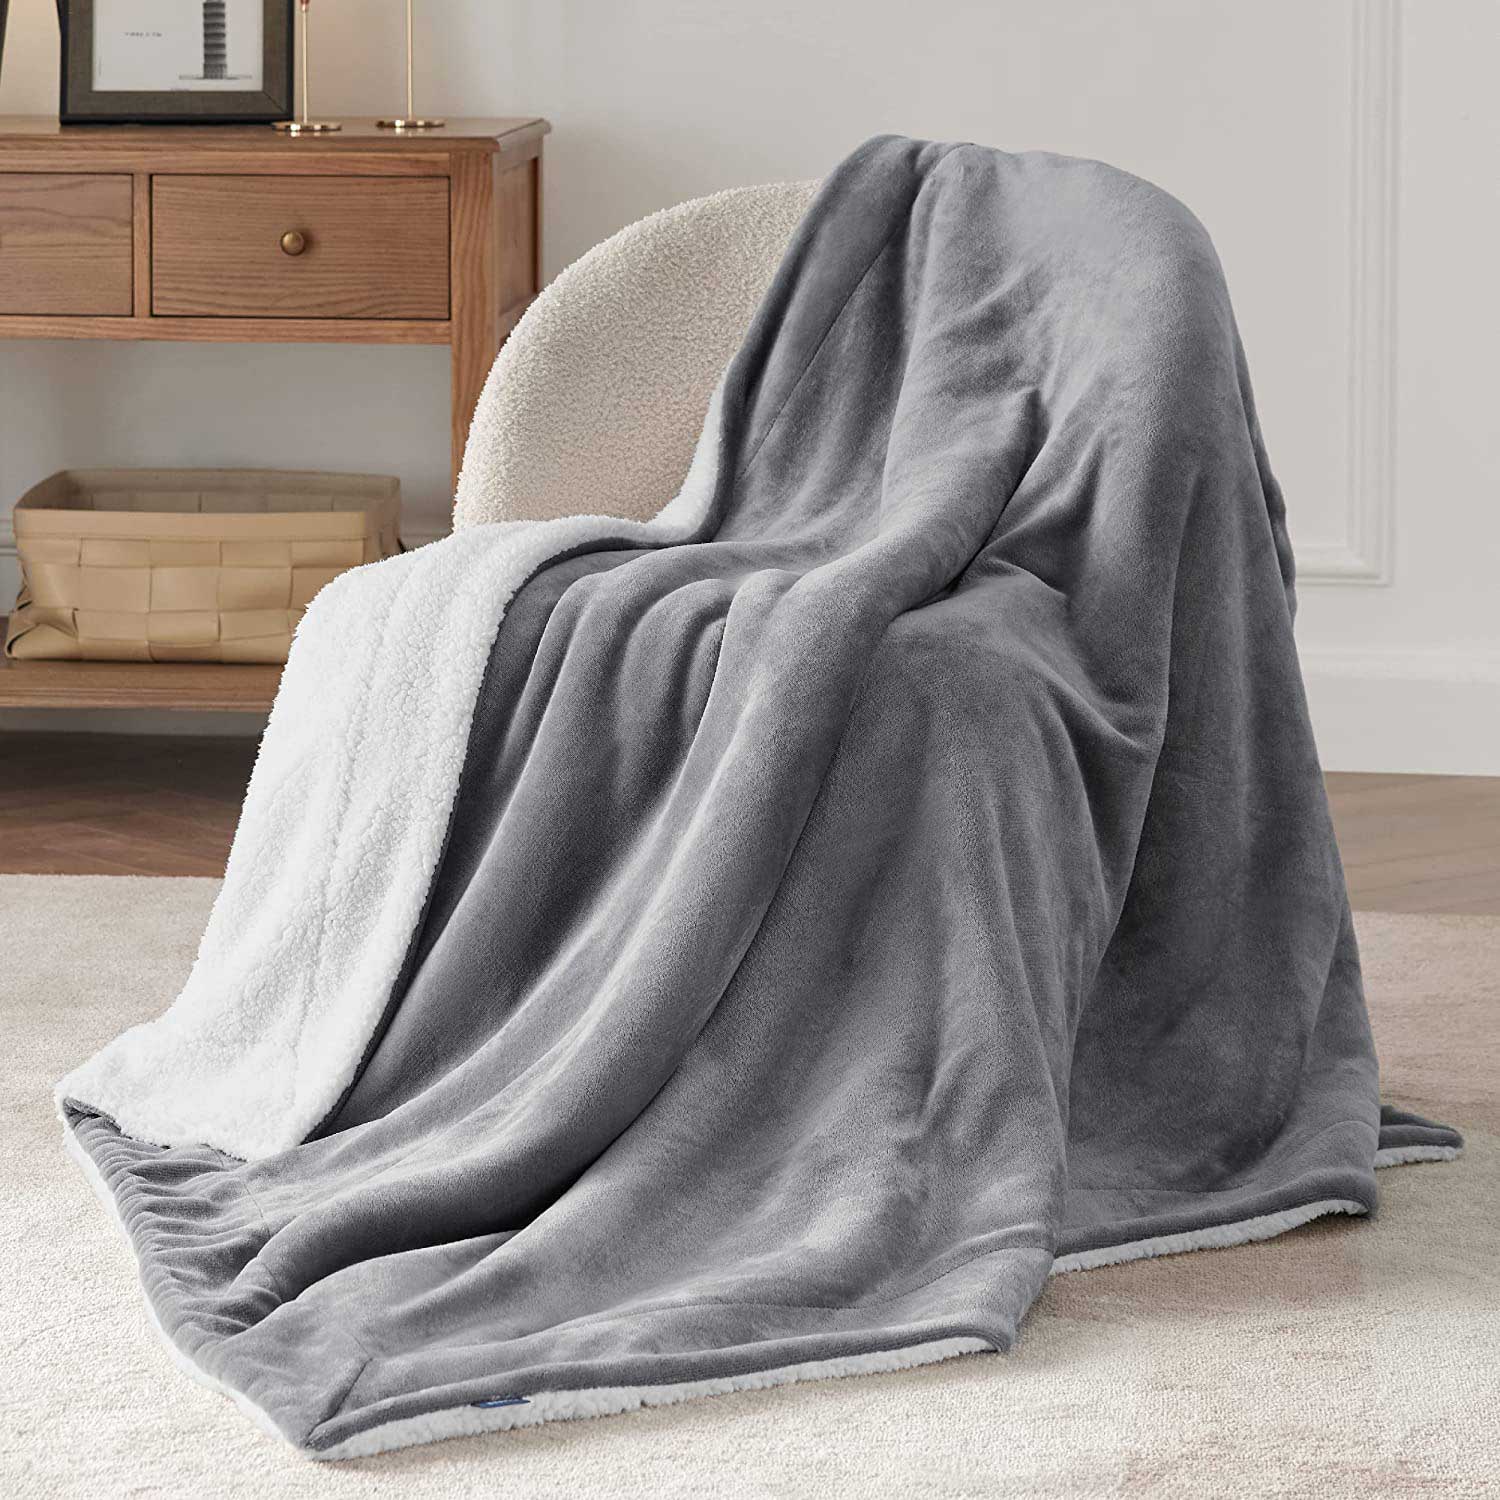 blanket on chair